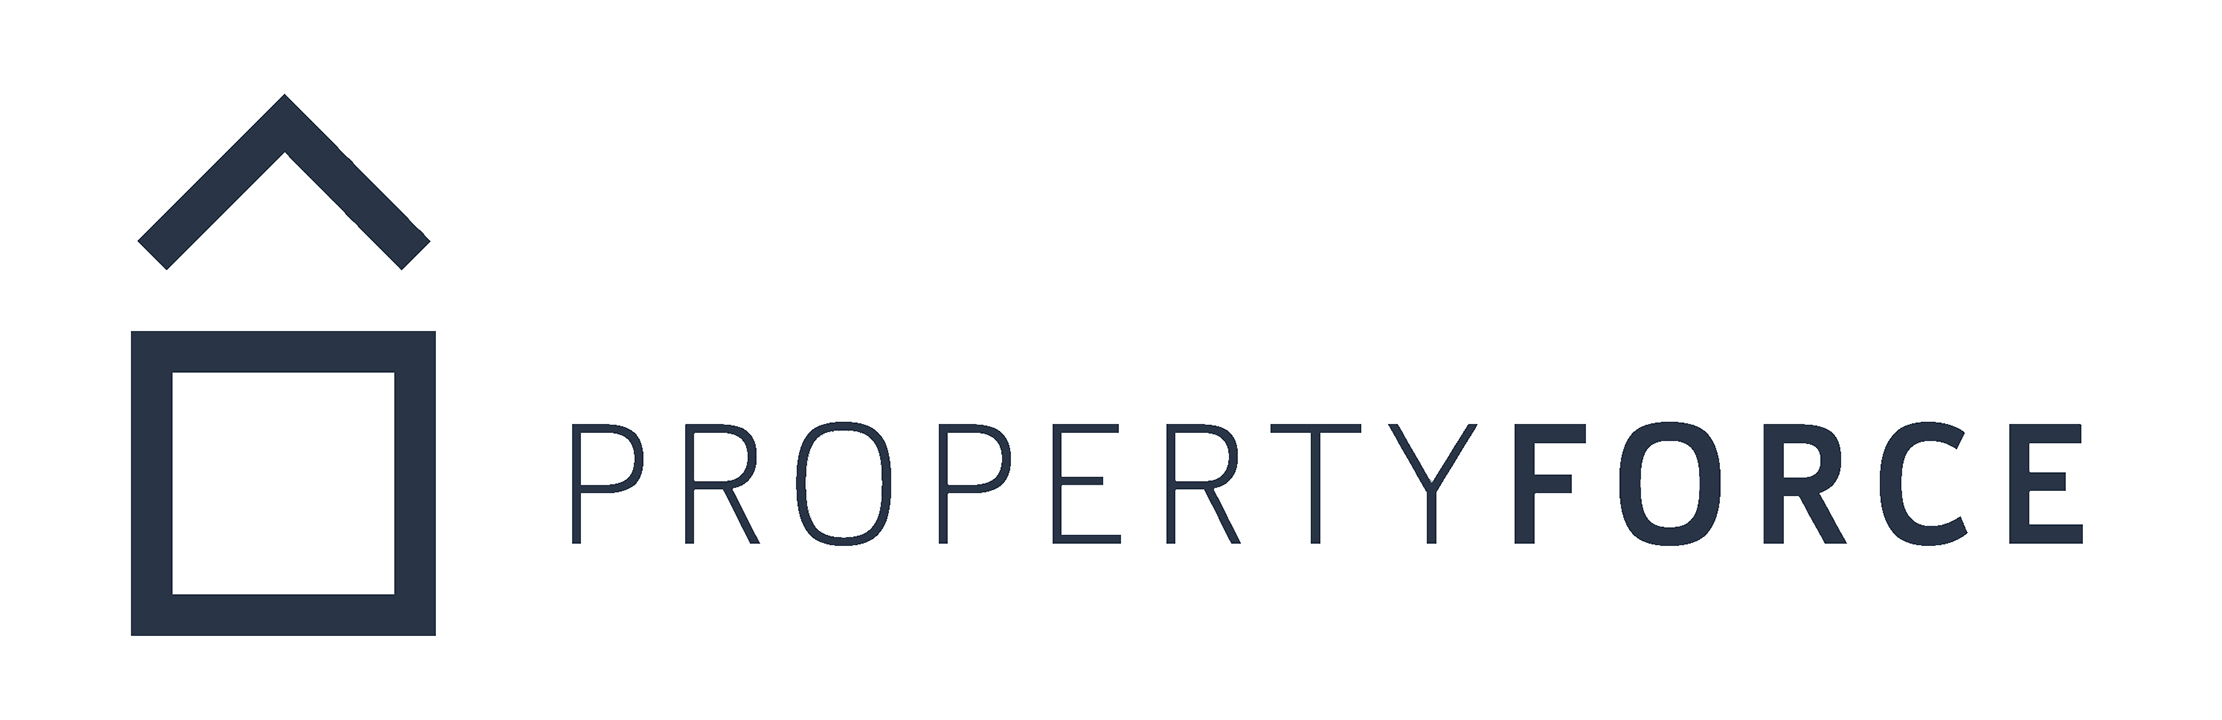 PropertyForce logo